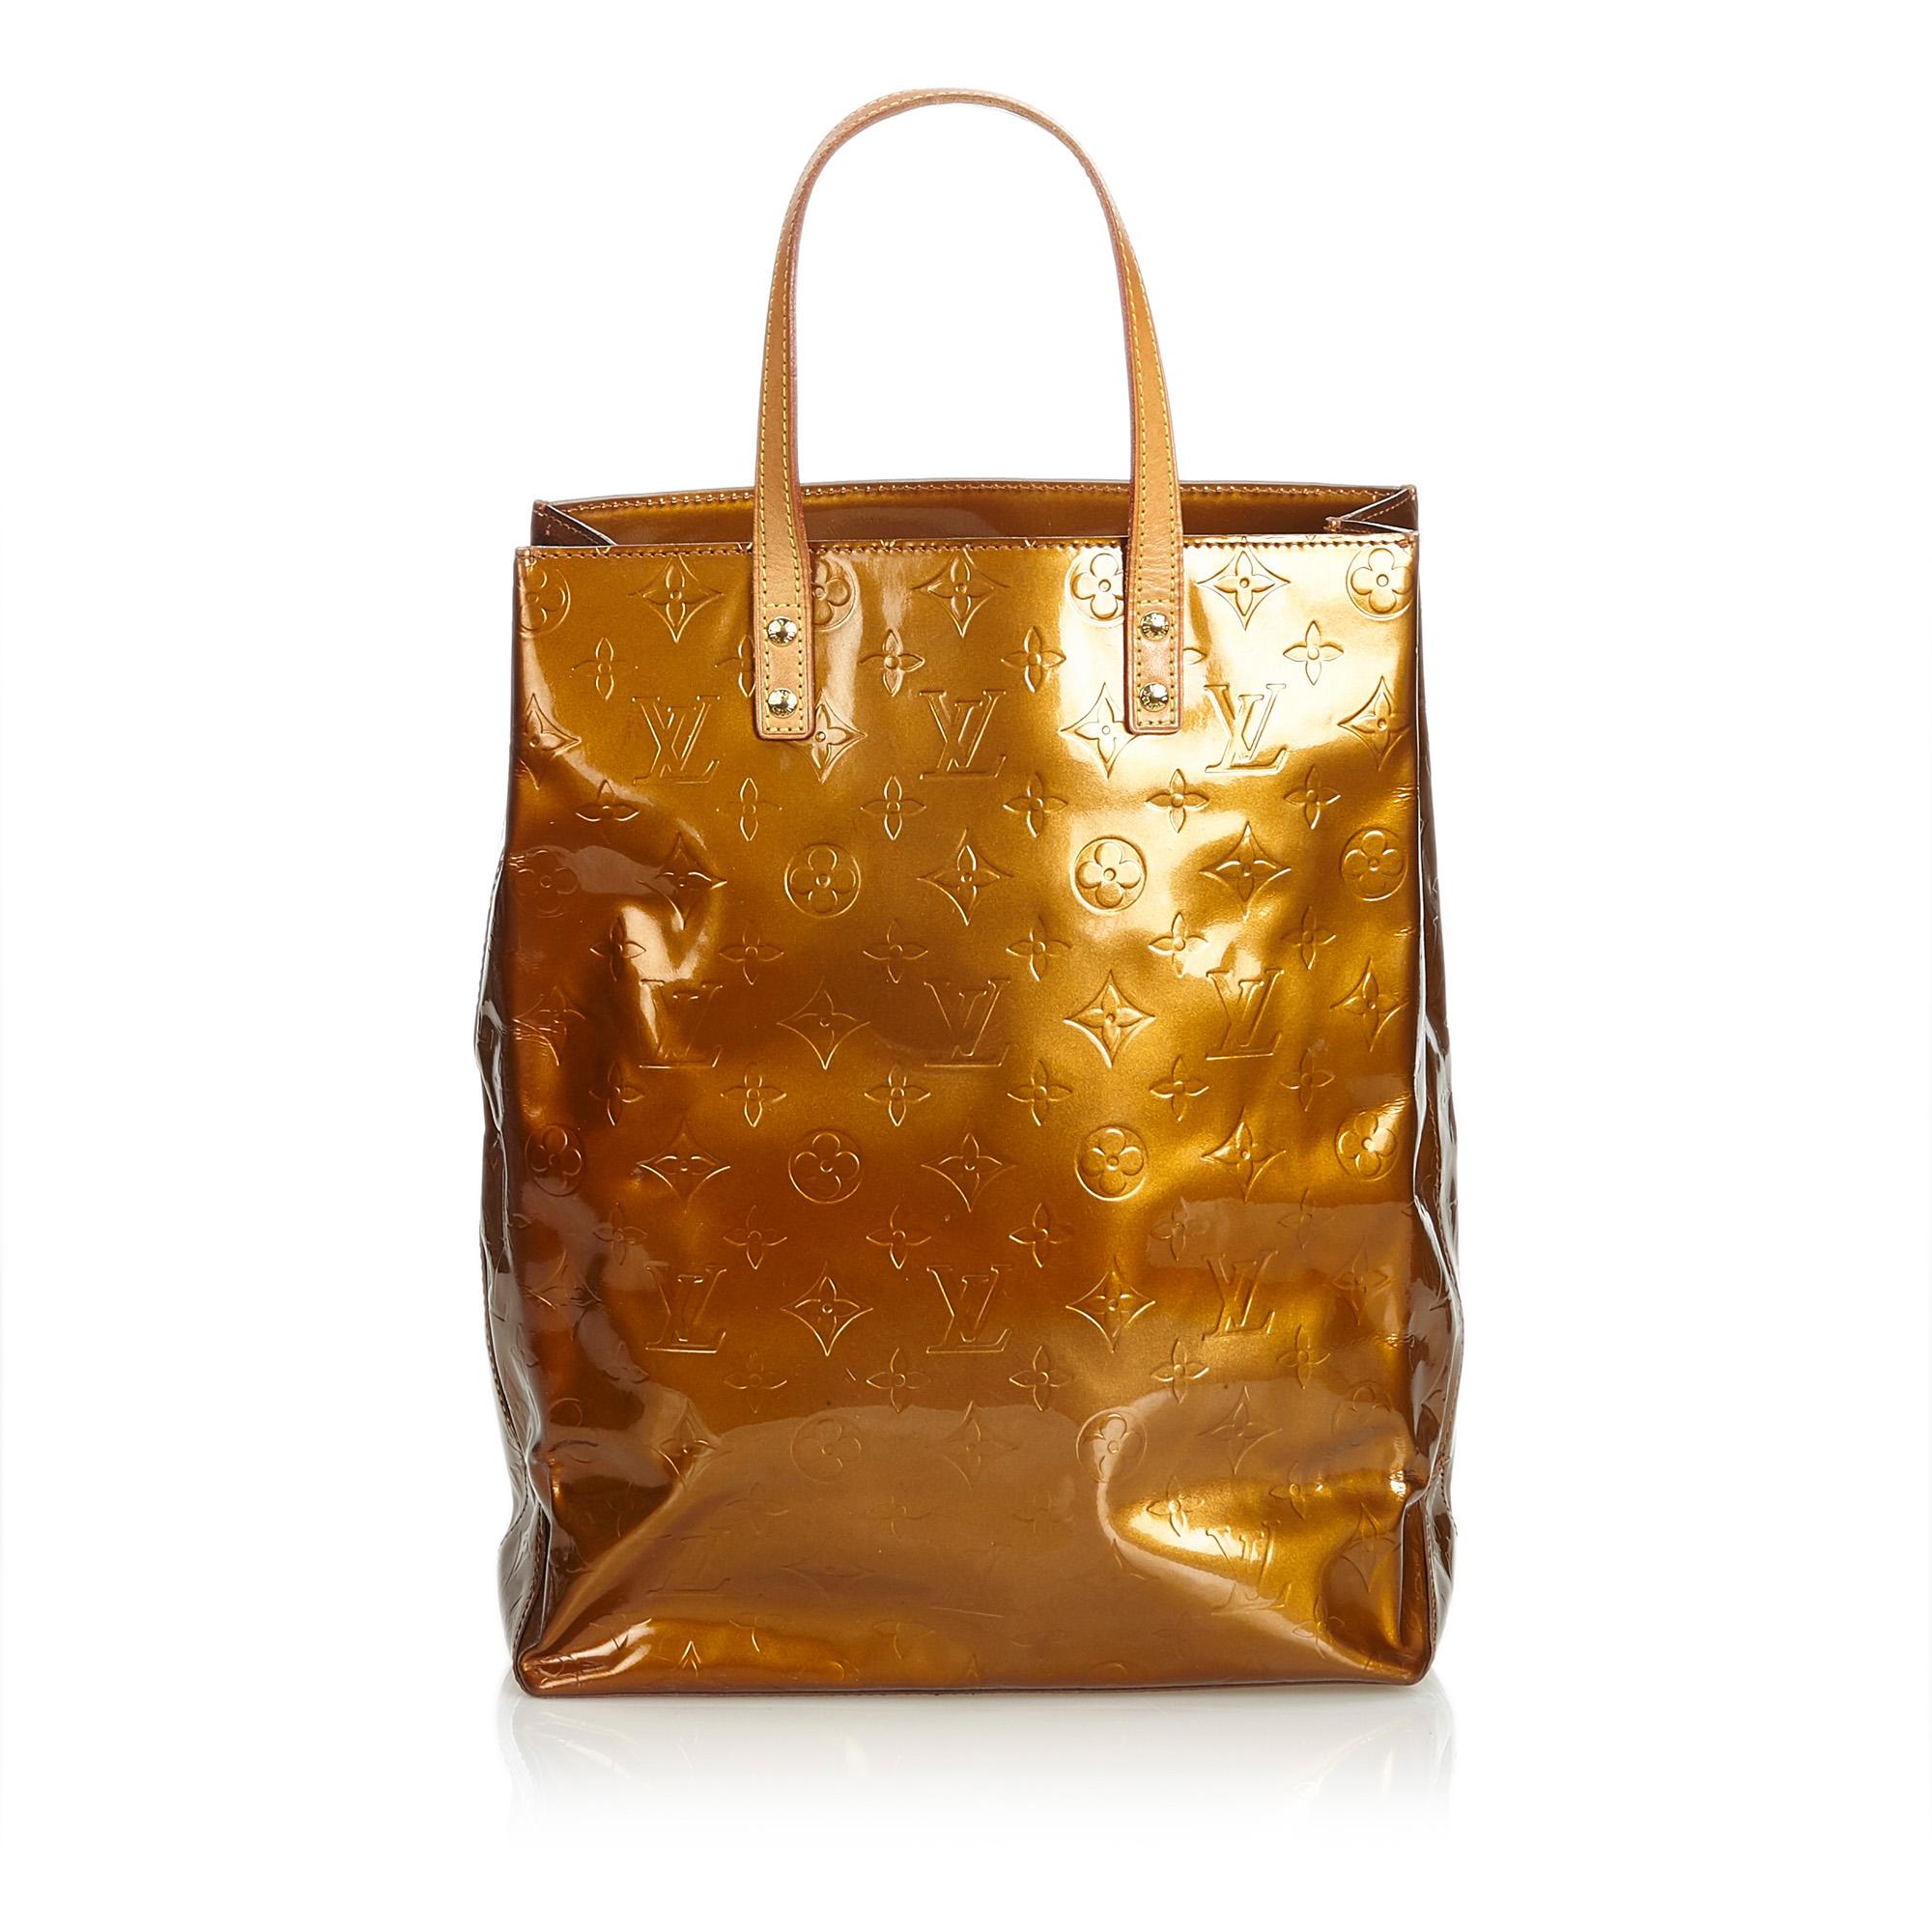 Louis Vuitton Vernis Reade Mm Everyday Bag in Brown - Lyst